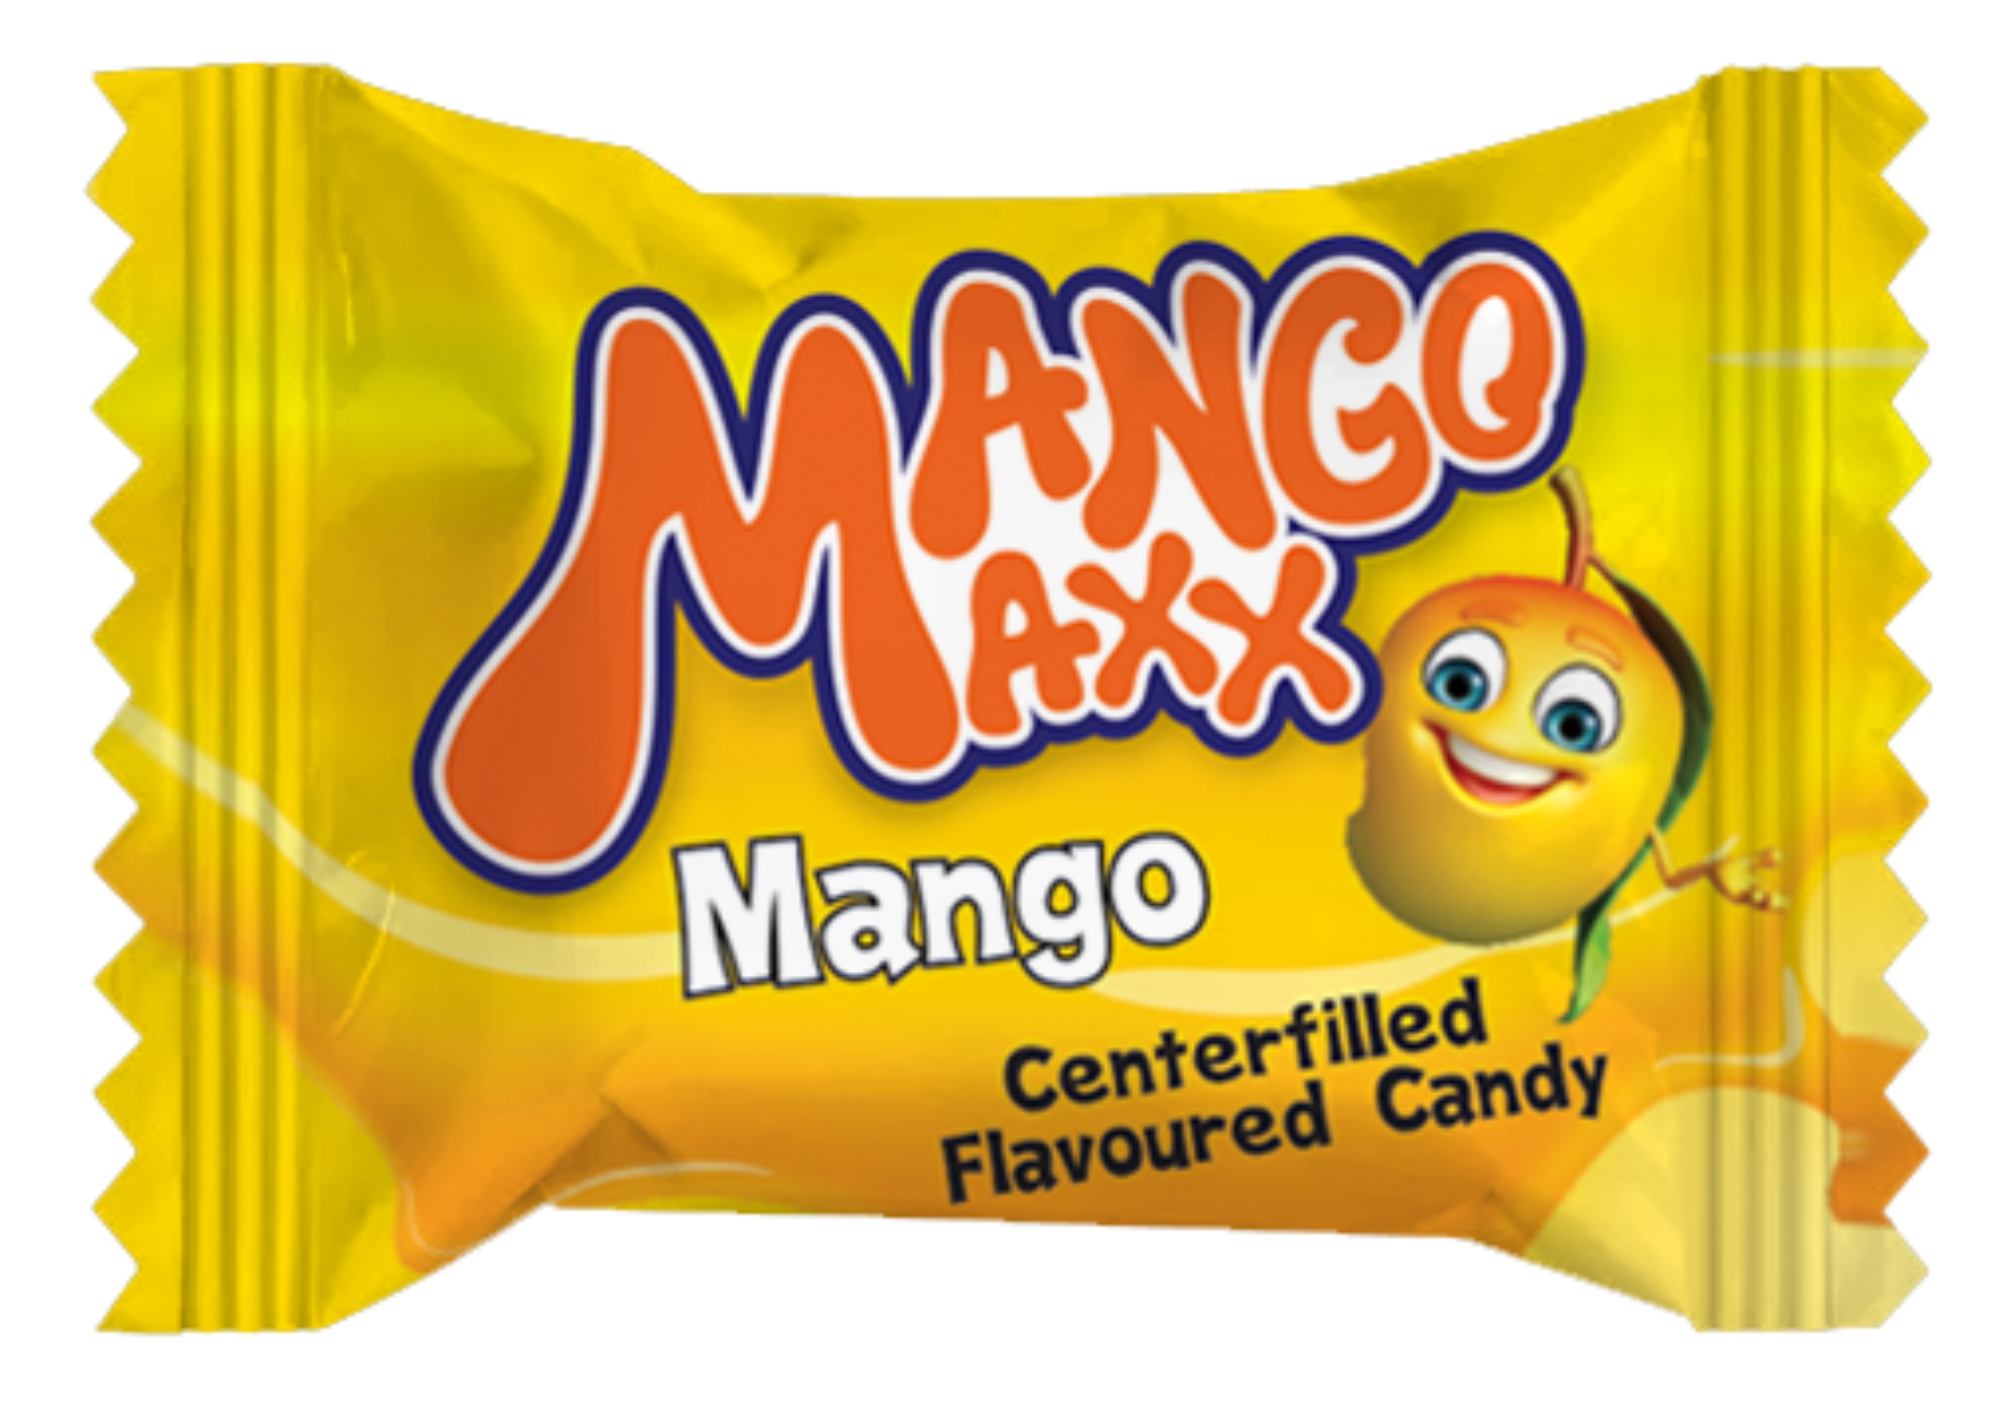 Mango flavoured Candy